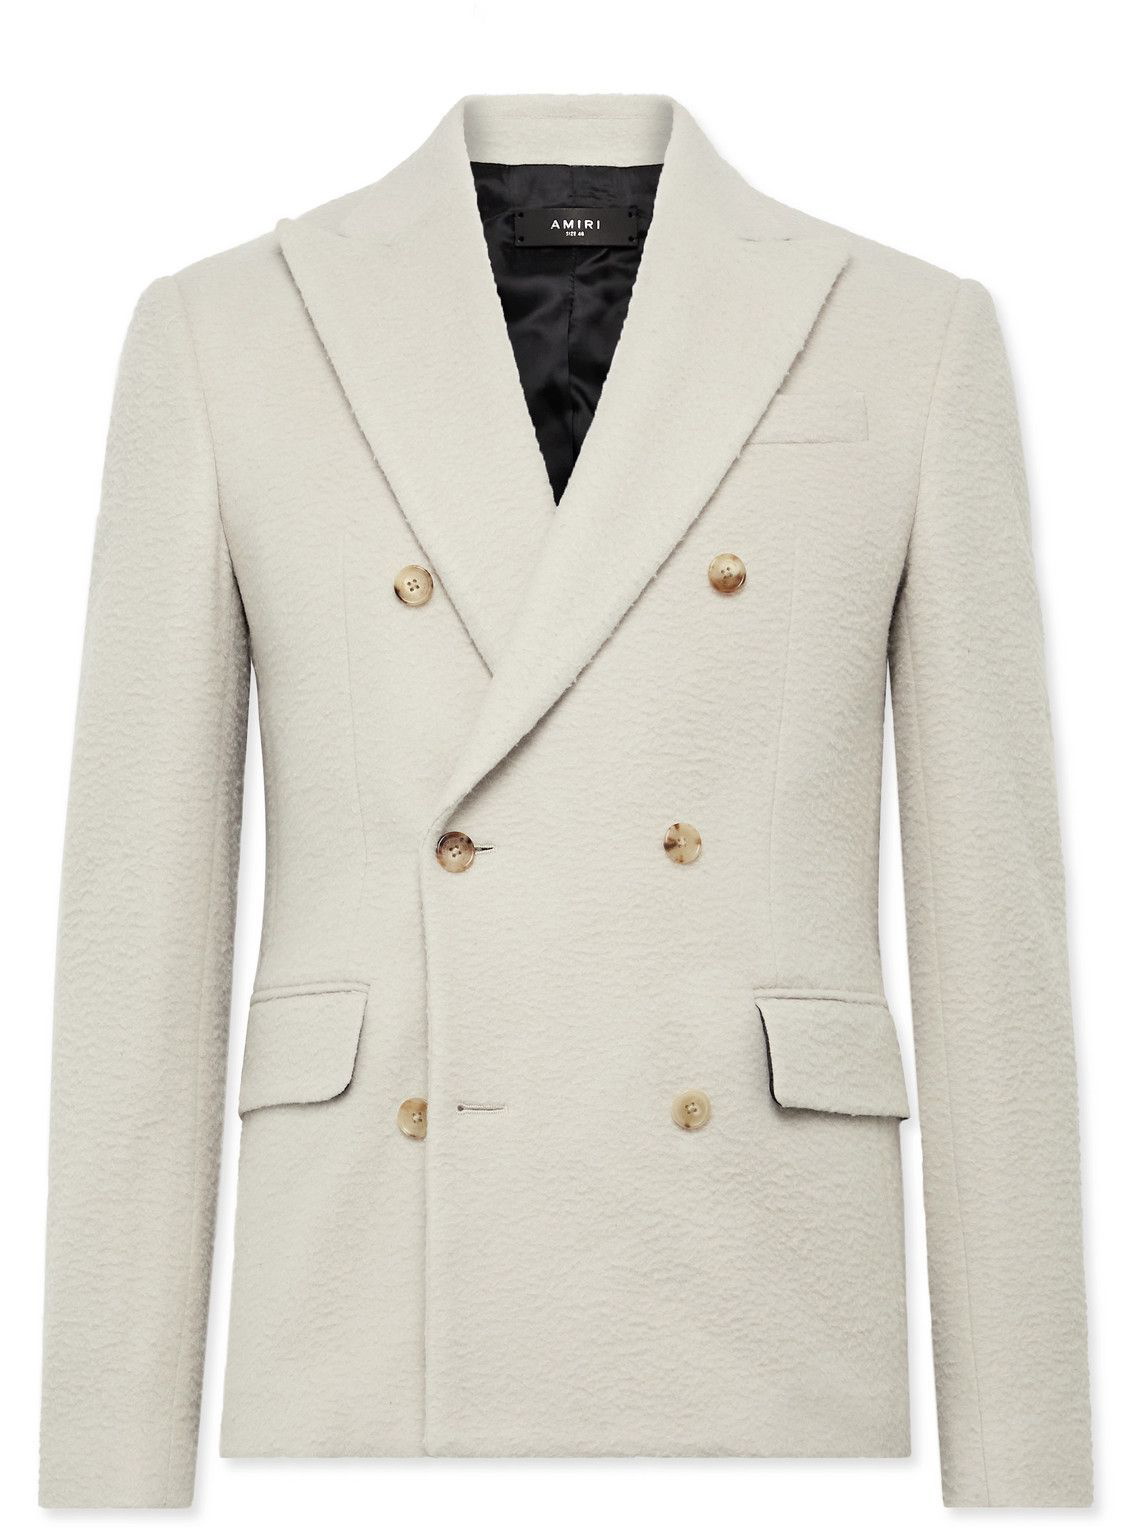 Geiger Austria Soft Boiled Wool 3 Pc Jacket Skirt Belt Suit EU 42 Tyrol |  eBay